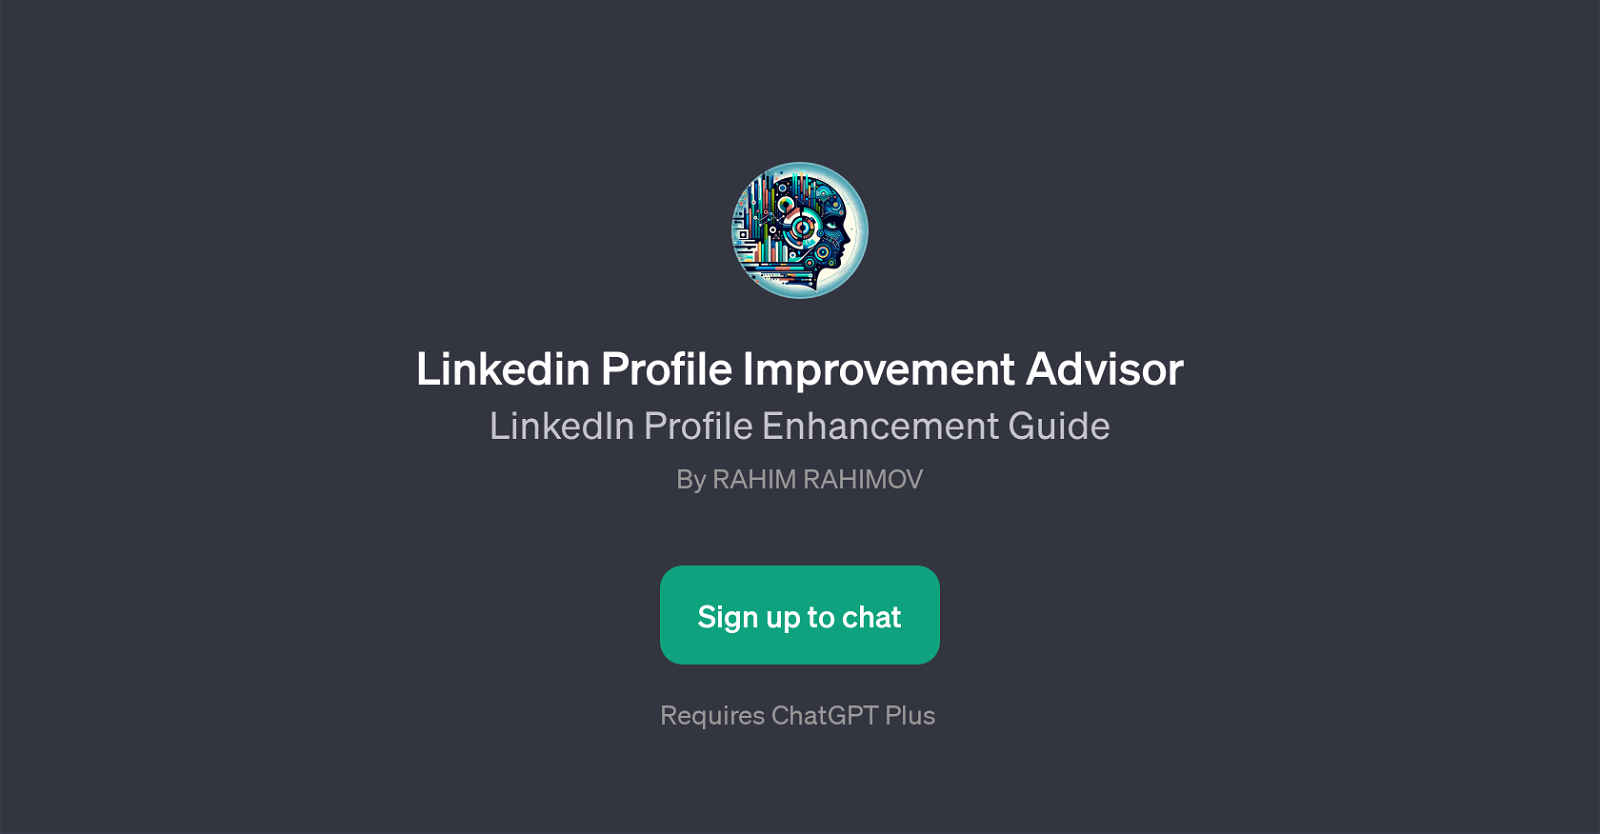 Linkedin Profile Improvement Advisor website